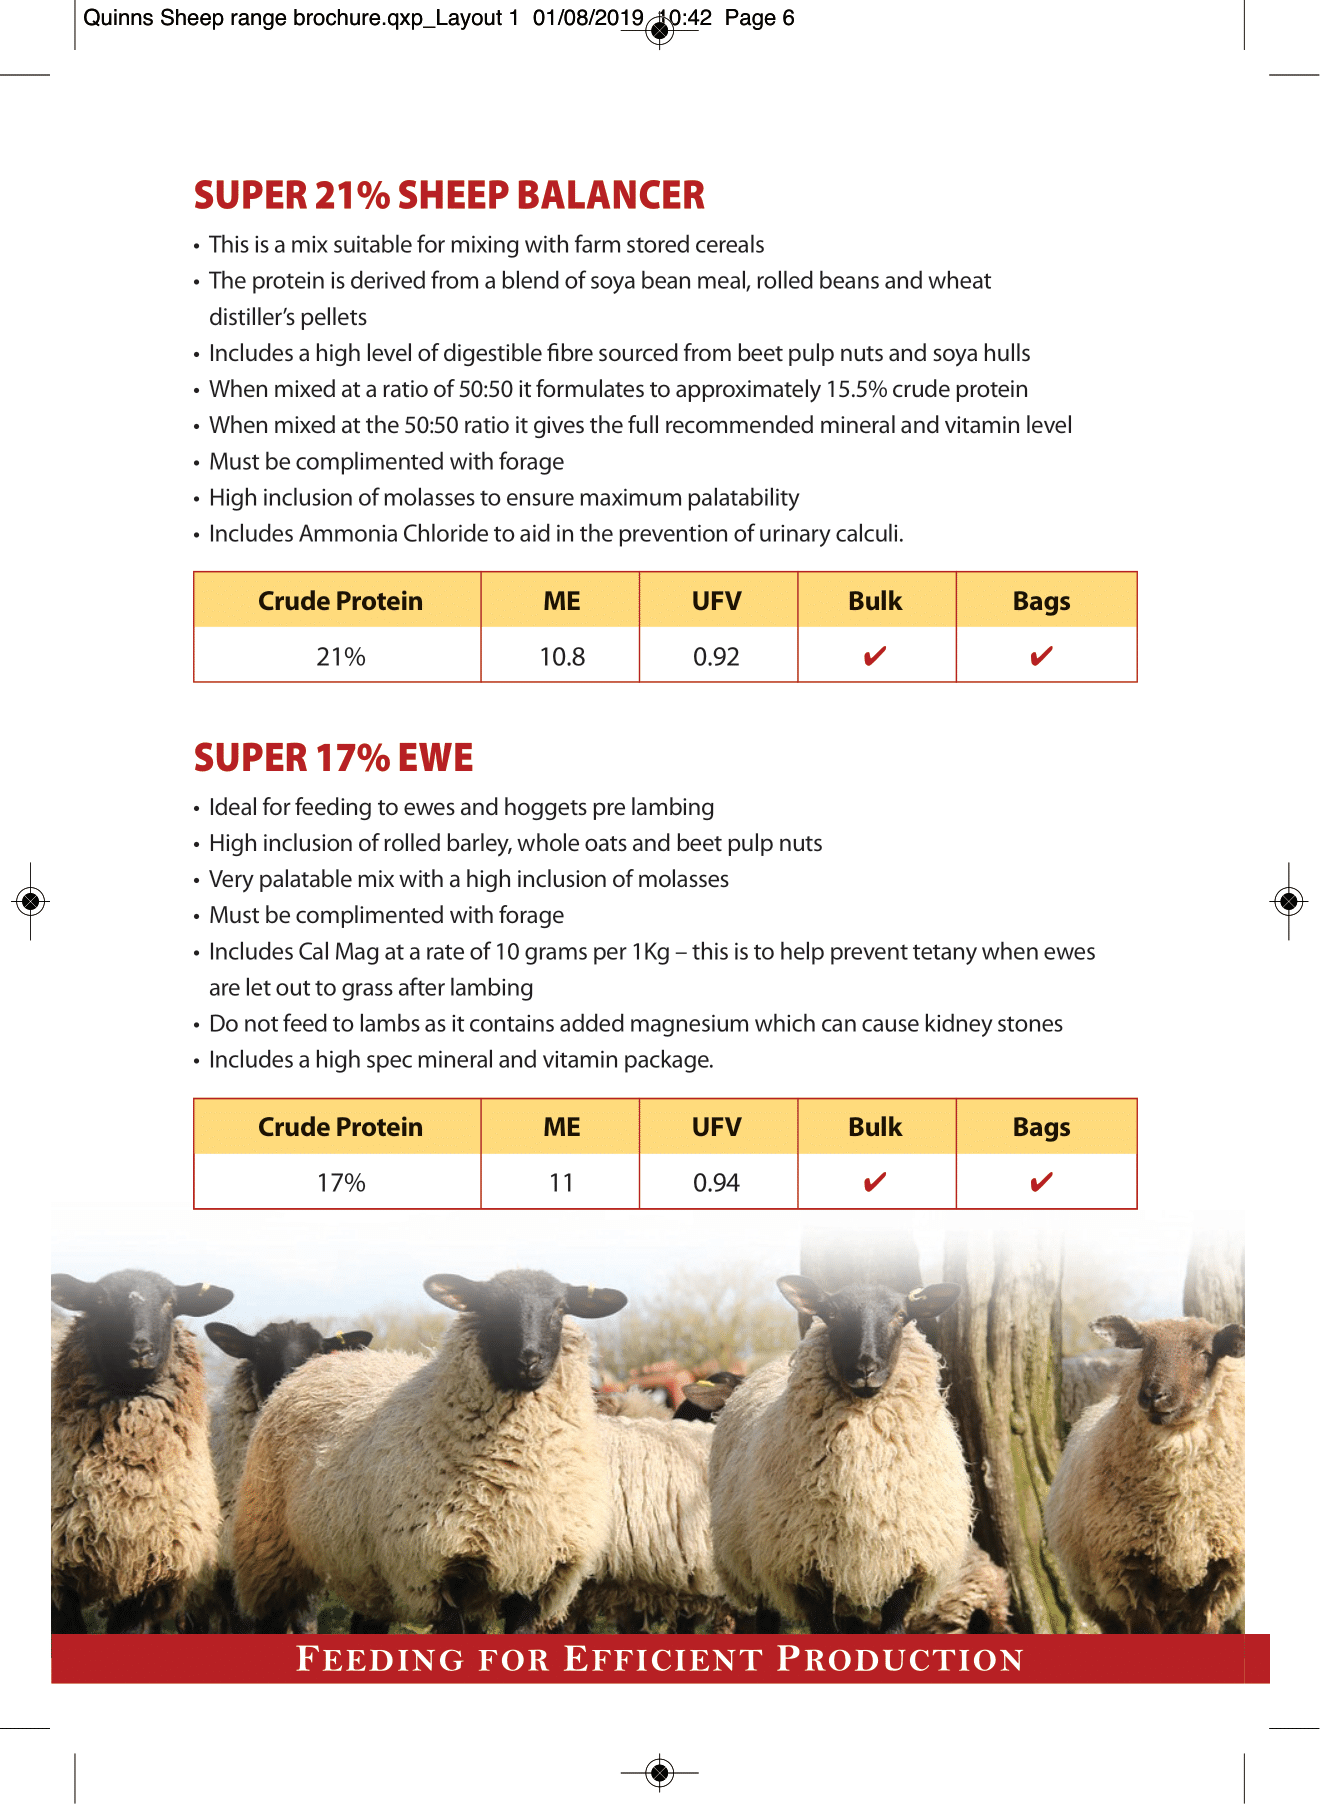 Quinns Sheep range brochure AW-6